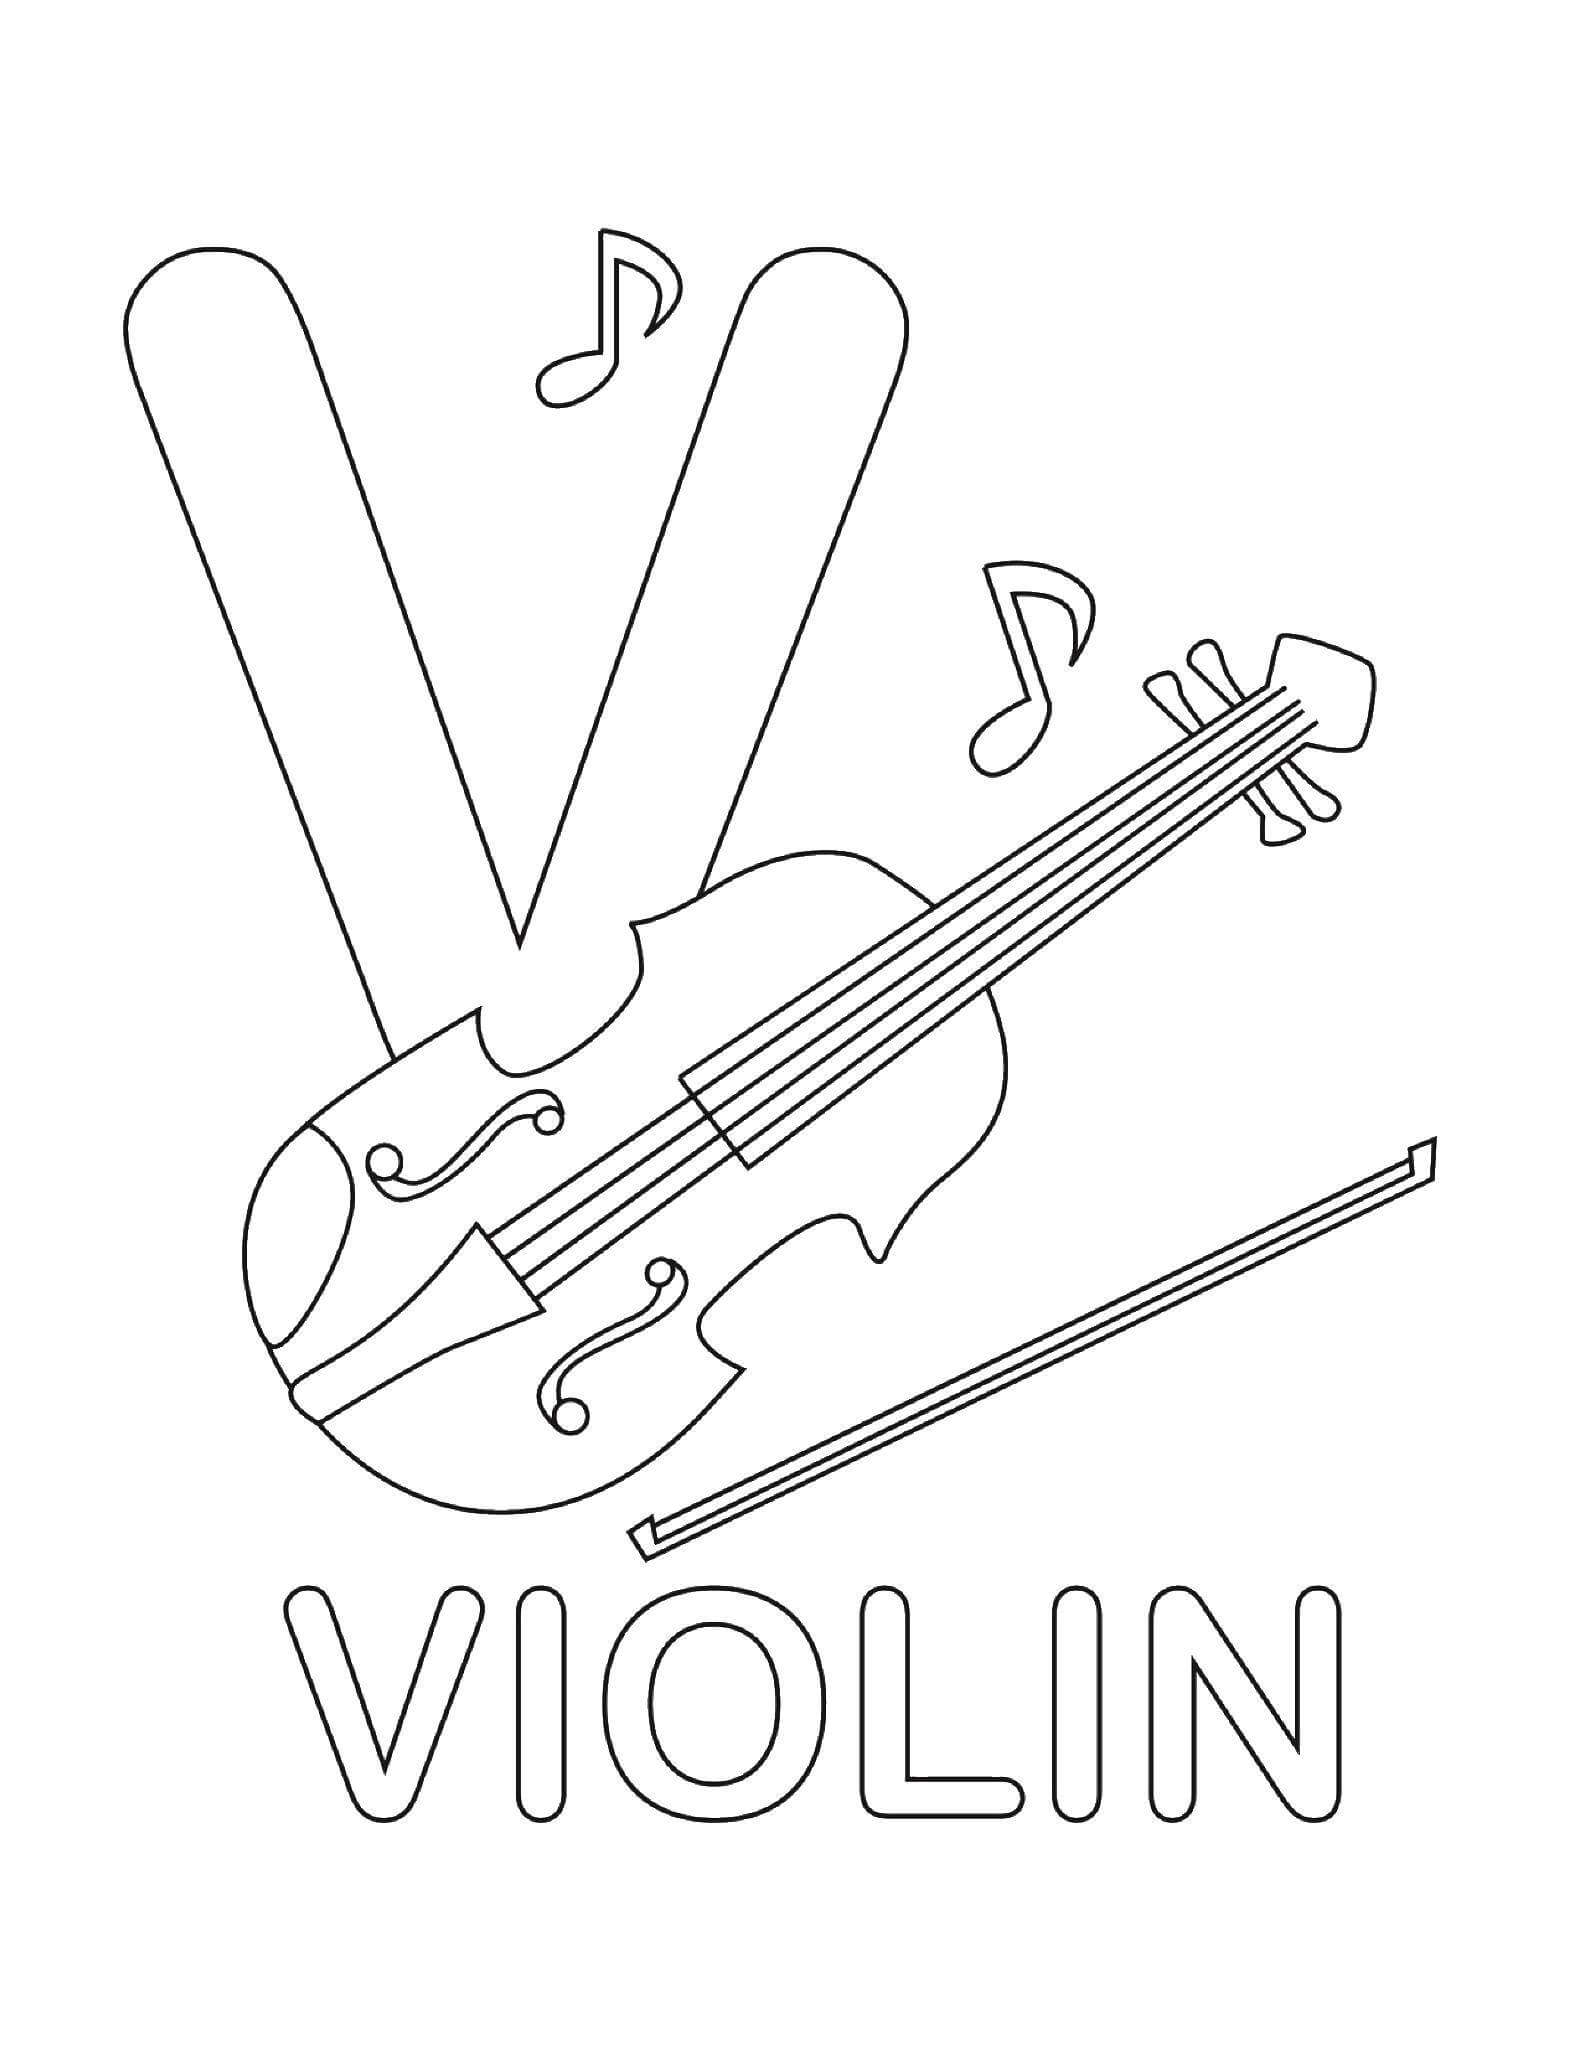 Letra V e Violino para colorir